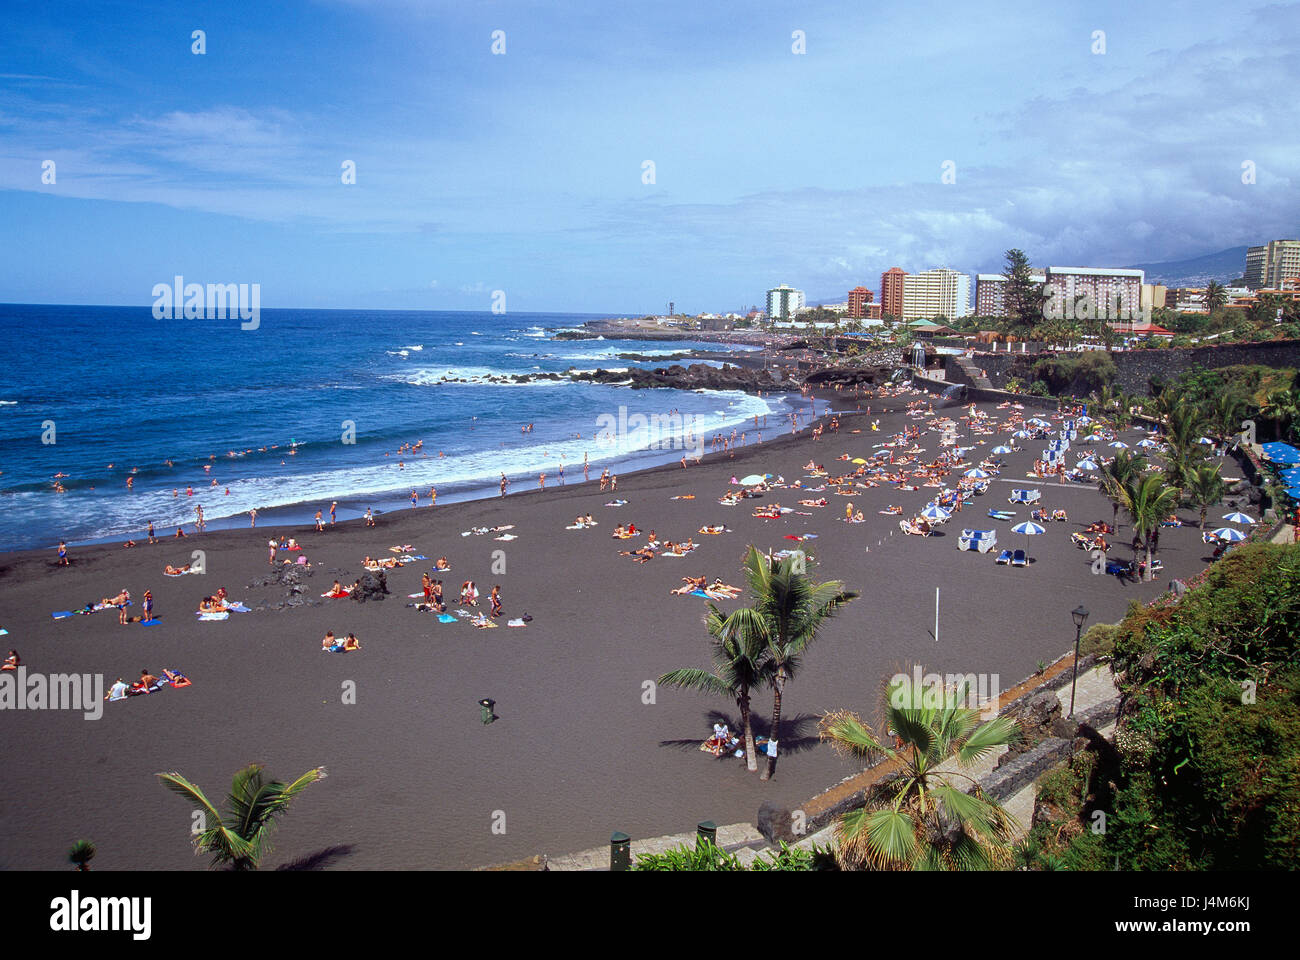 Jardin beach. Puerto de la Cruz, Tenerife island, Canary Islands, Spain. Stock Photo